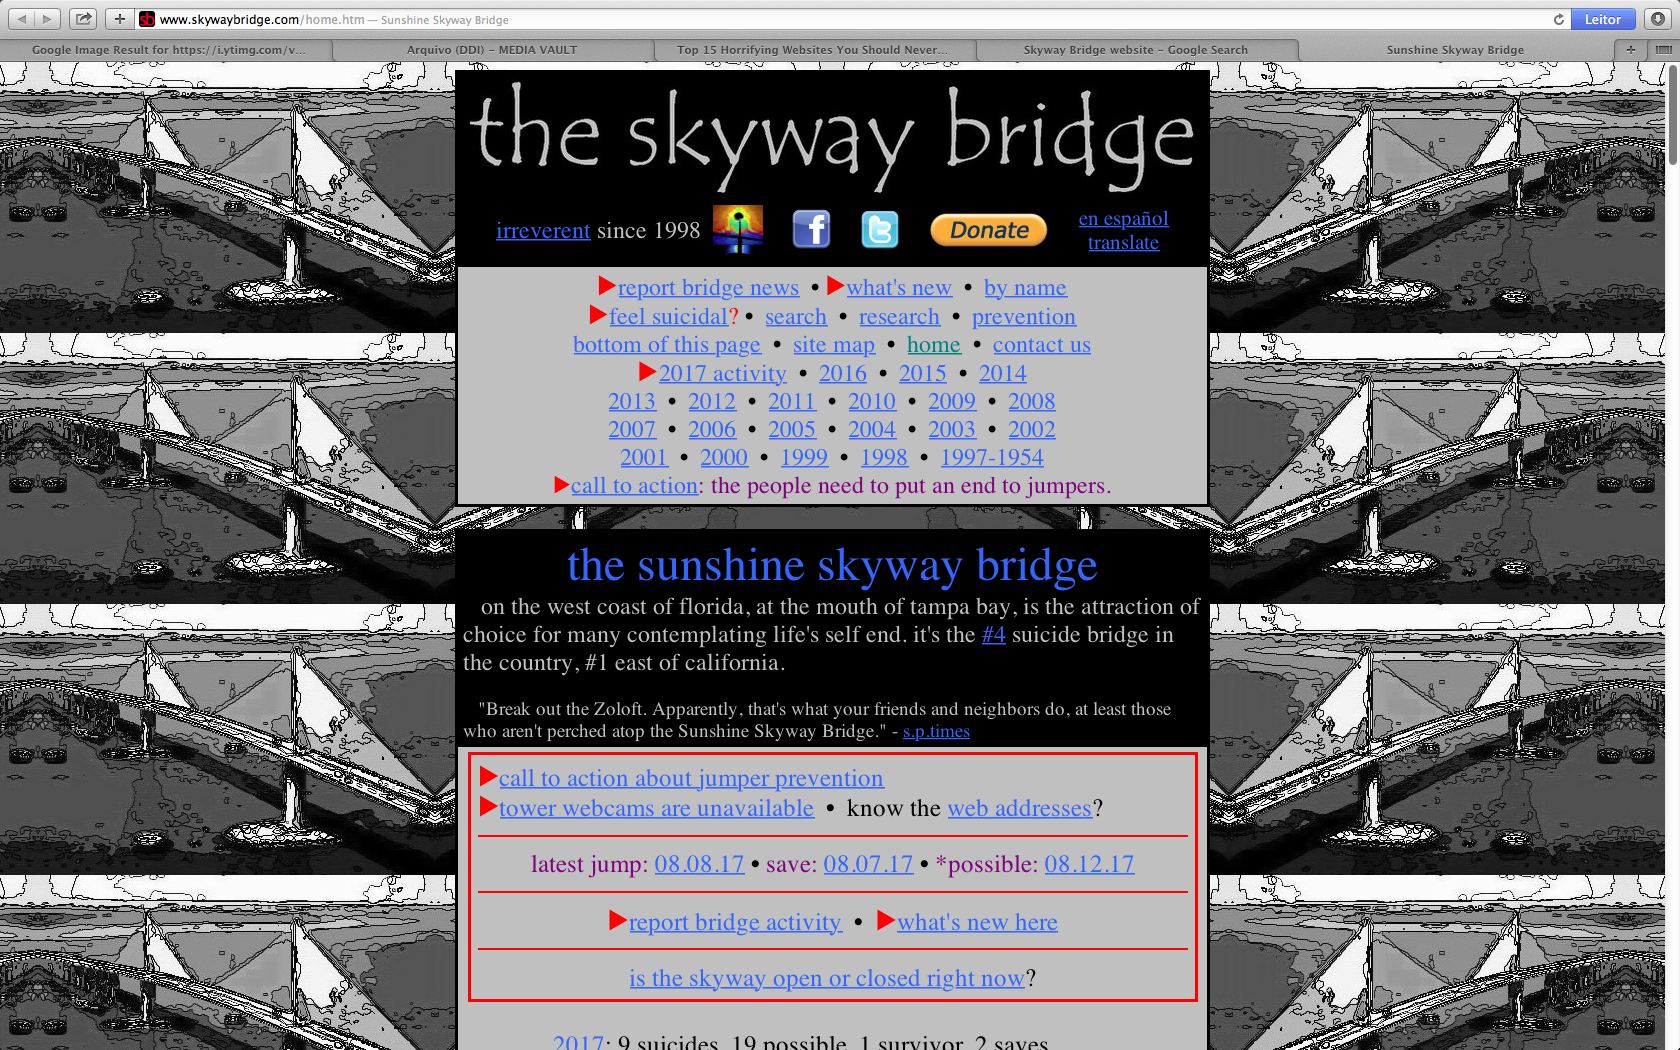 Skyway Bridge